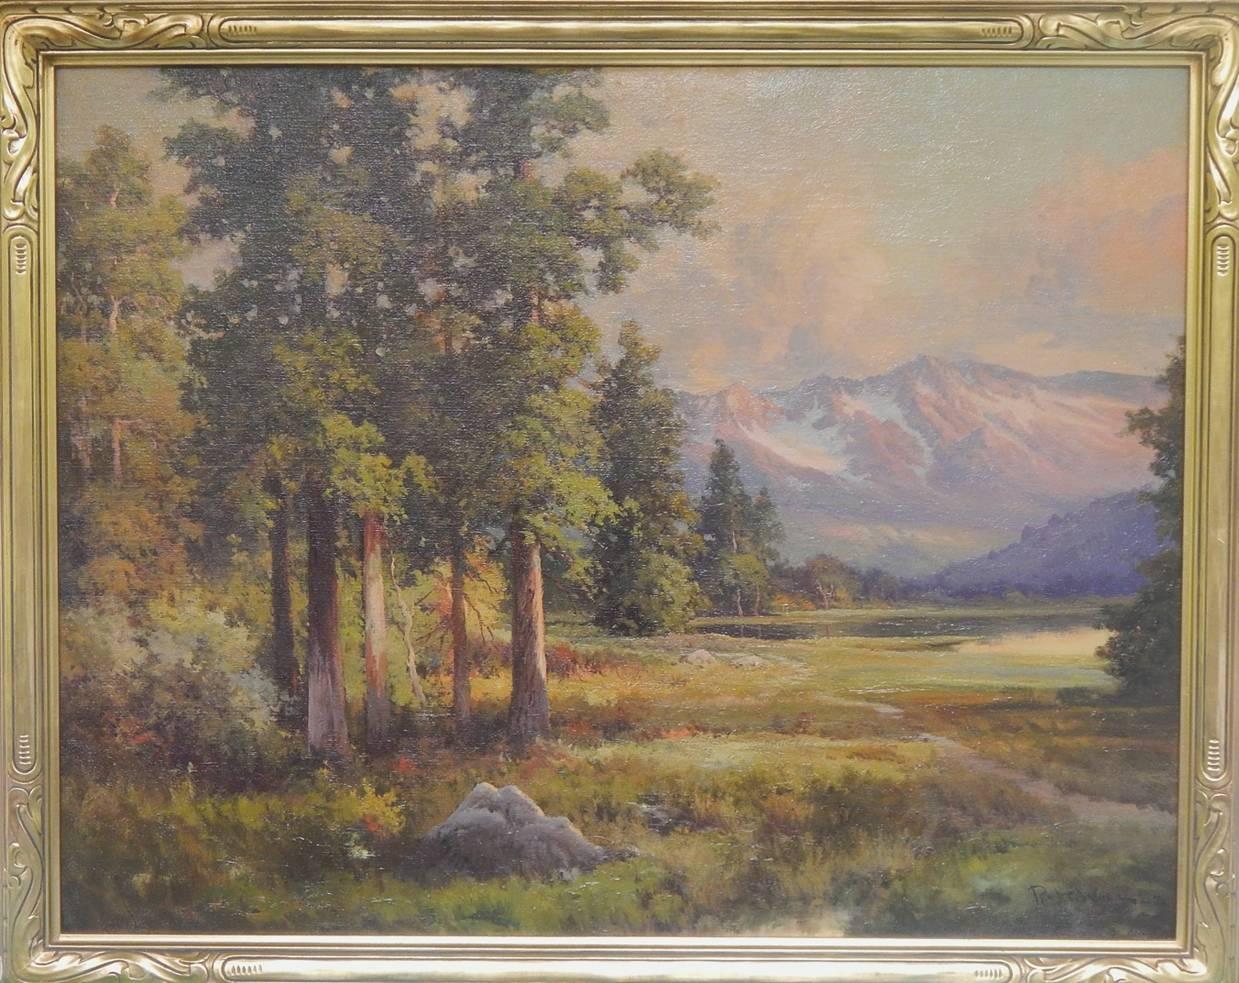 Sunset in the Sierra's 1942 - California Mountain Landscape oil on canvas framed